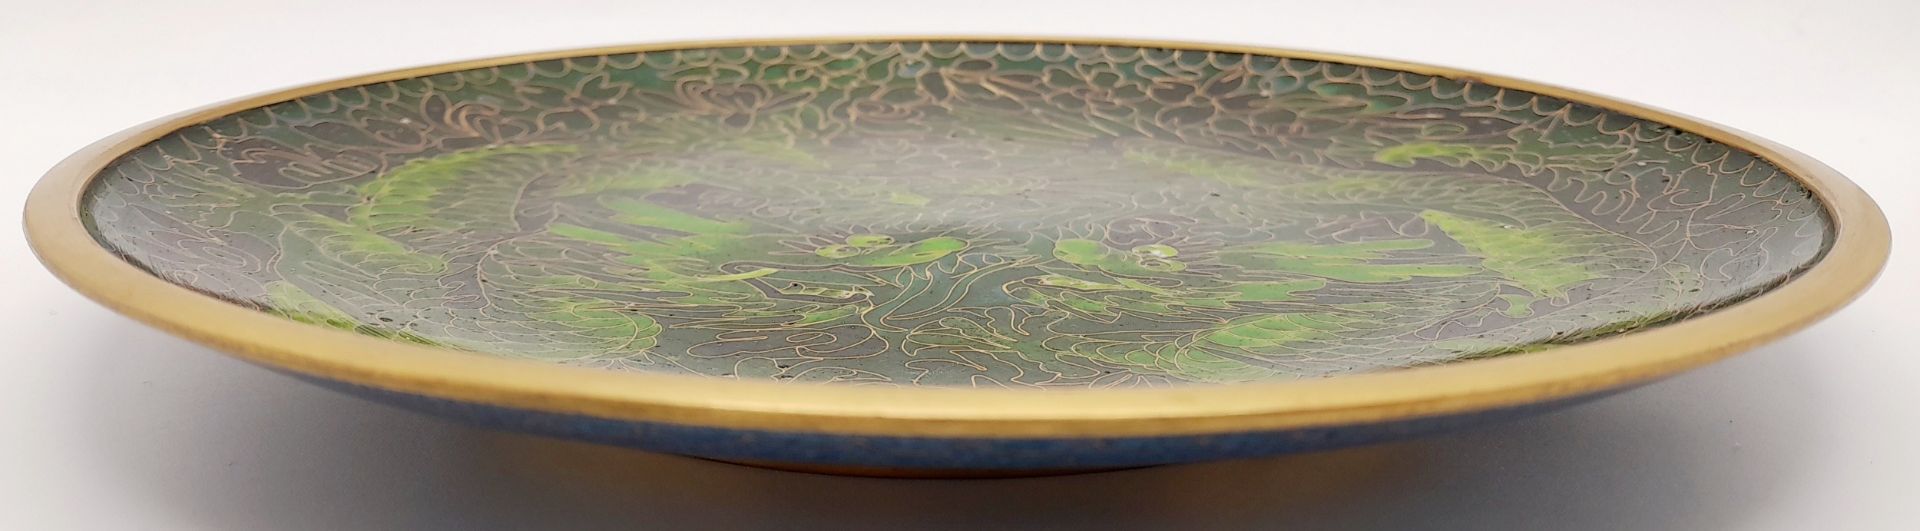 A Vintage Chinese Cloisonné Enamel Plate. Dragon decoration. Markings on base. 23cm diameter. - Image 4 of 6